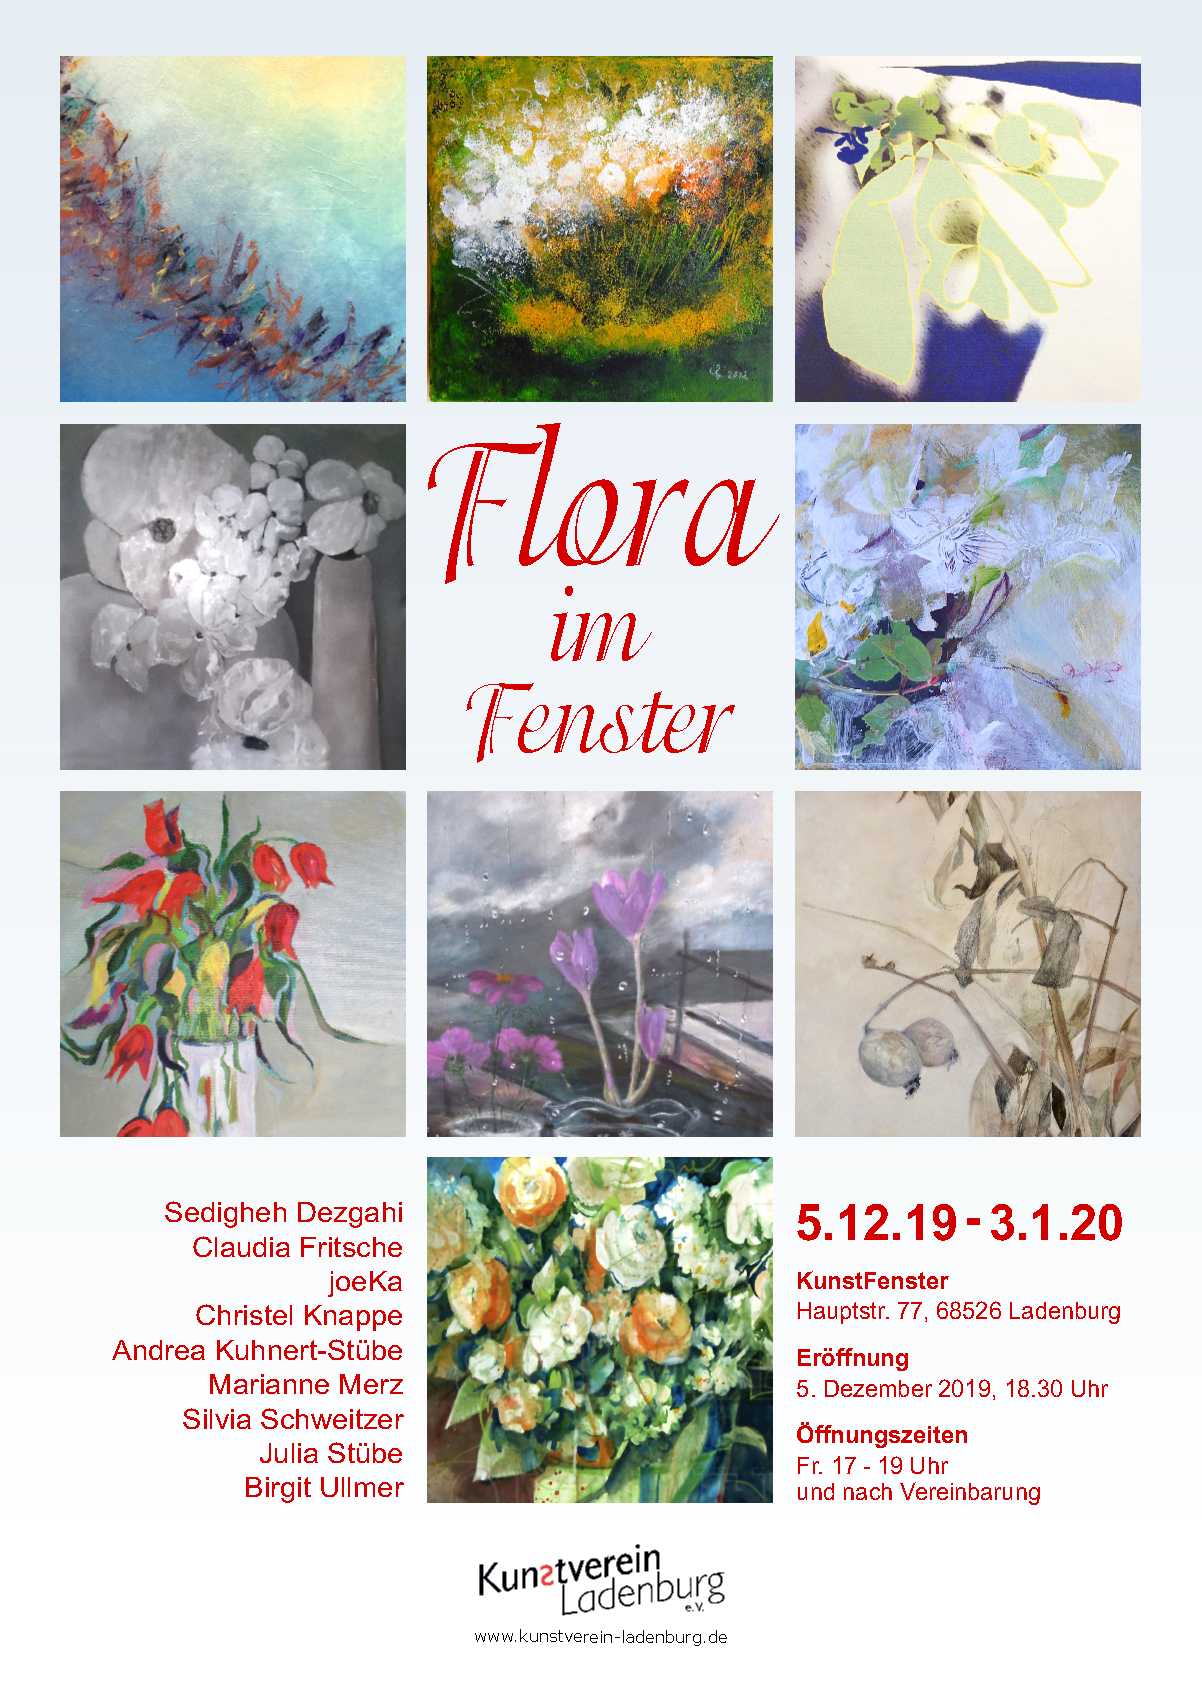 /images/kvl/Ausstellungen/20191205_FloraImFenster/original/00_Plakat Flora im Fenster.jpg